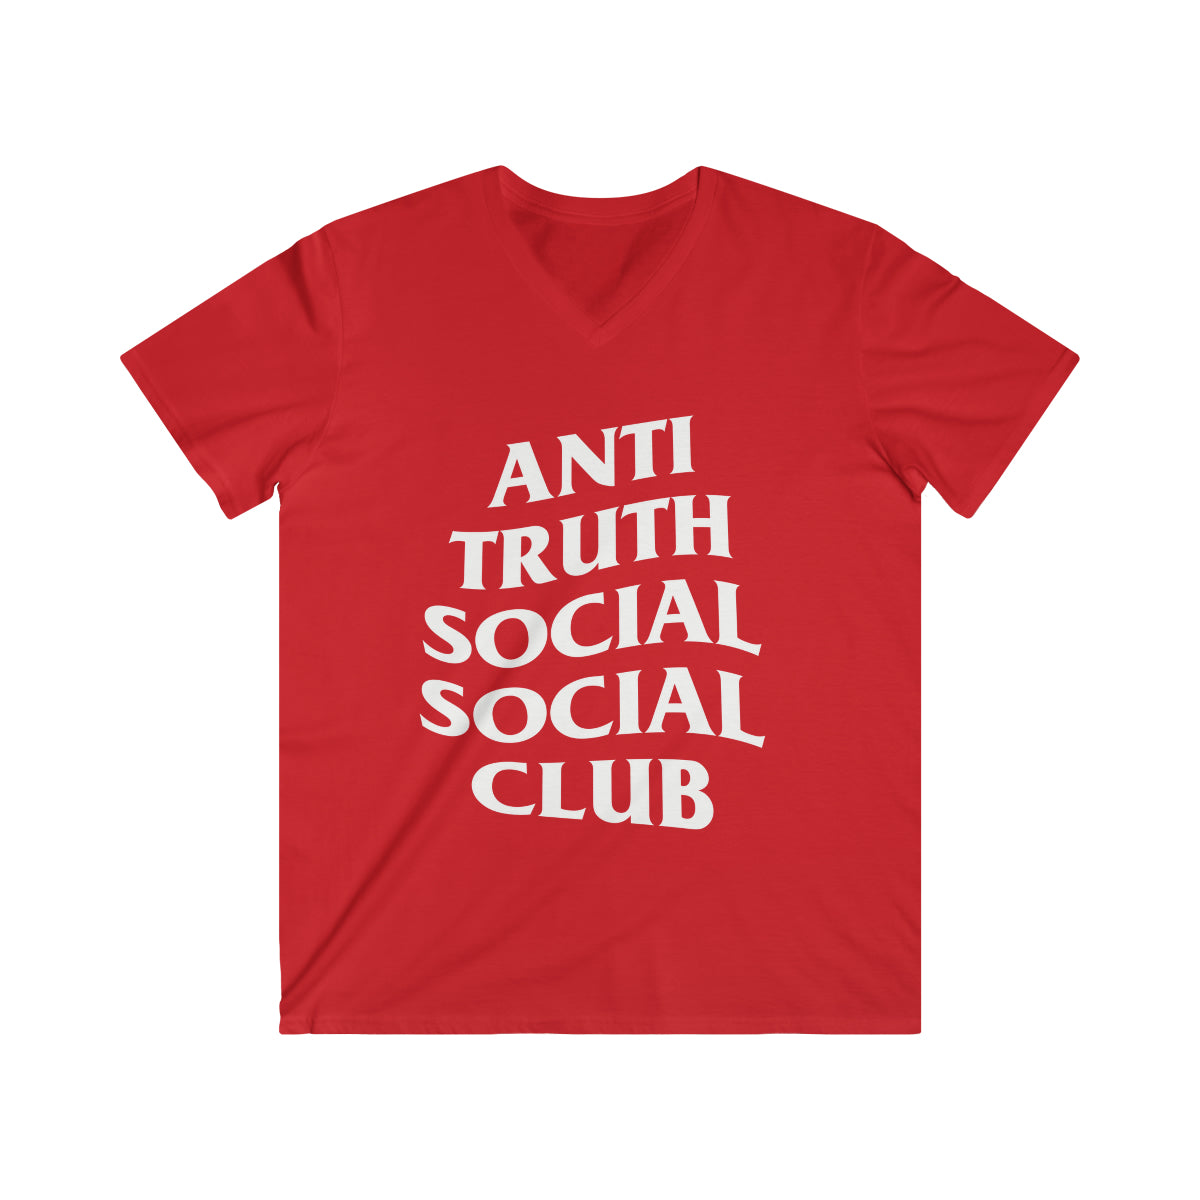 Anti Truth Social Social Club Men's Fitted V-Neck Short Sleeve Tee